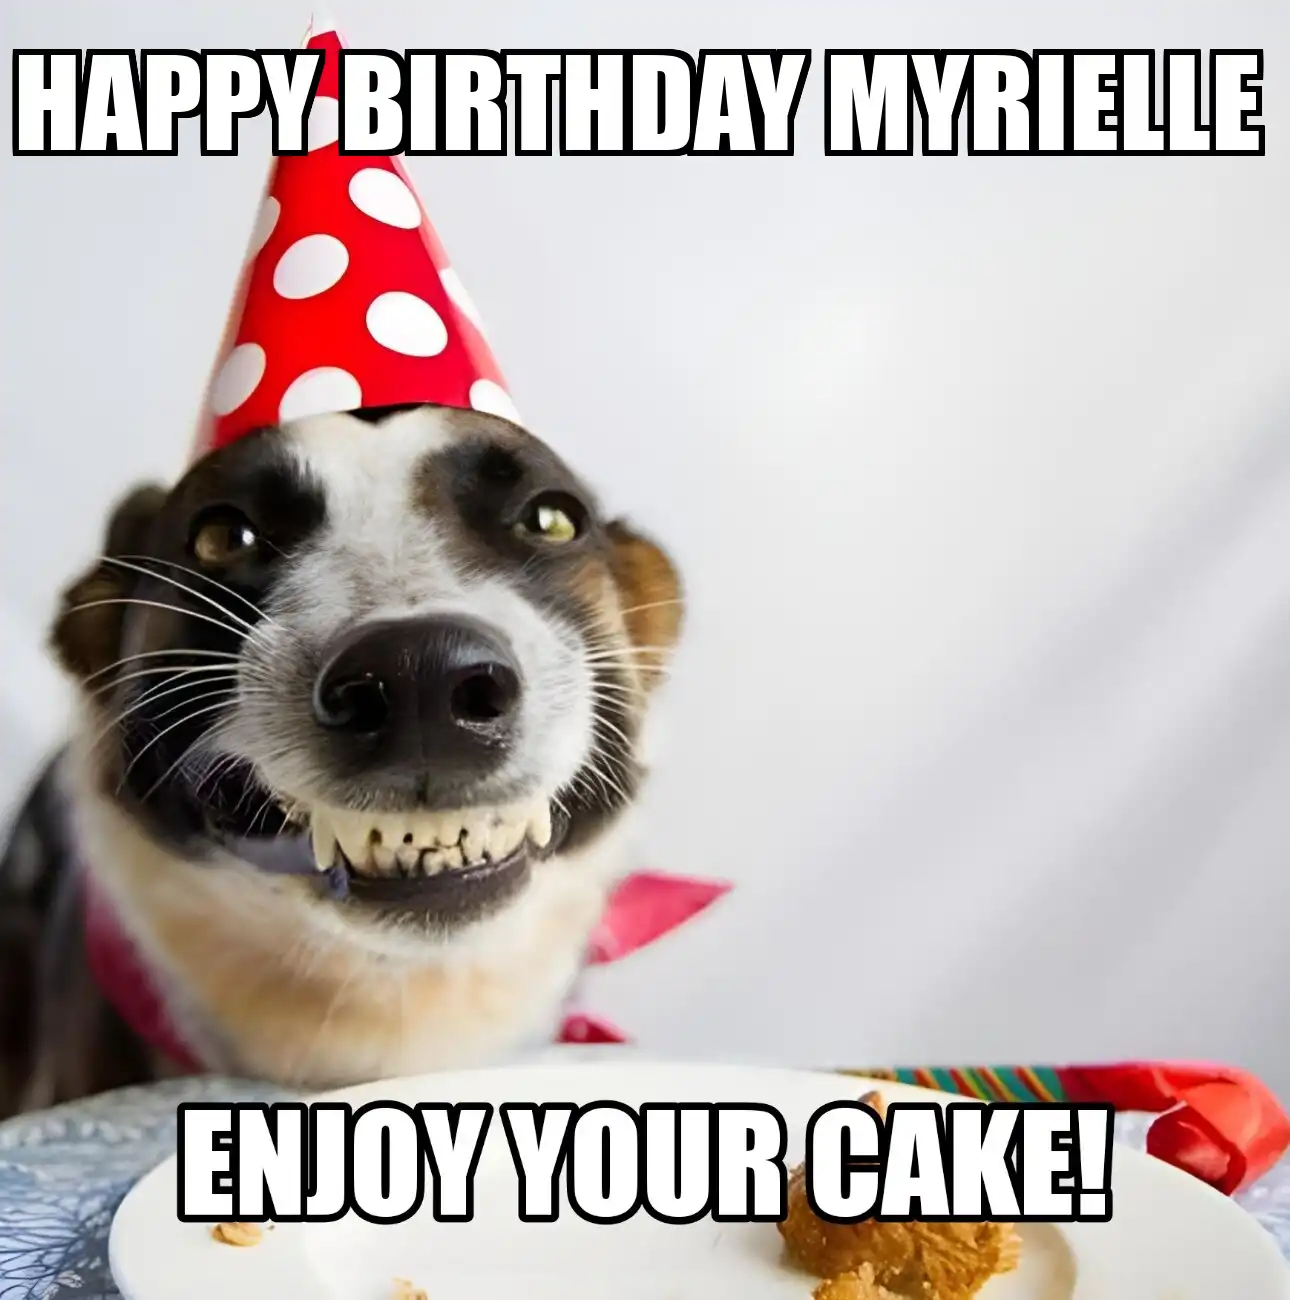 Happy Birthday Myrielle Enjoy Your Cake Dog Meme